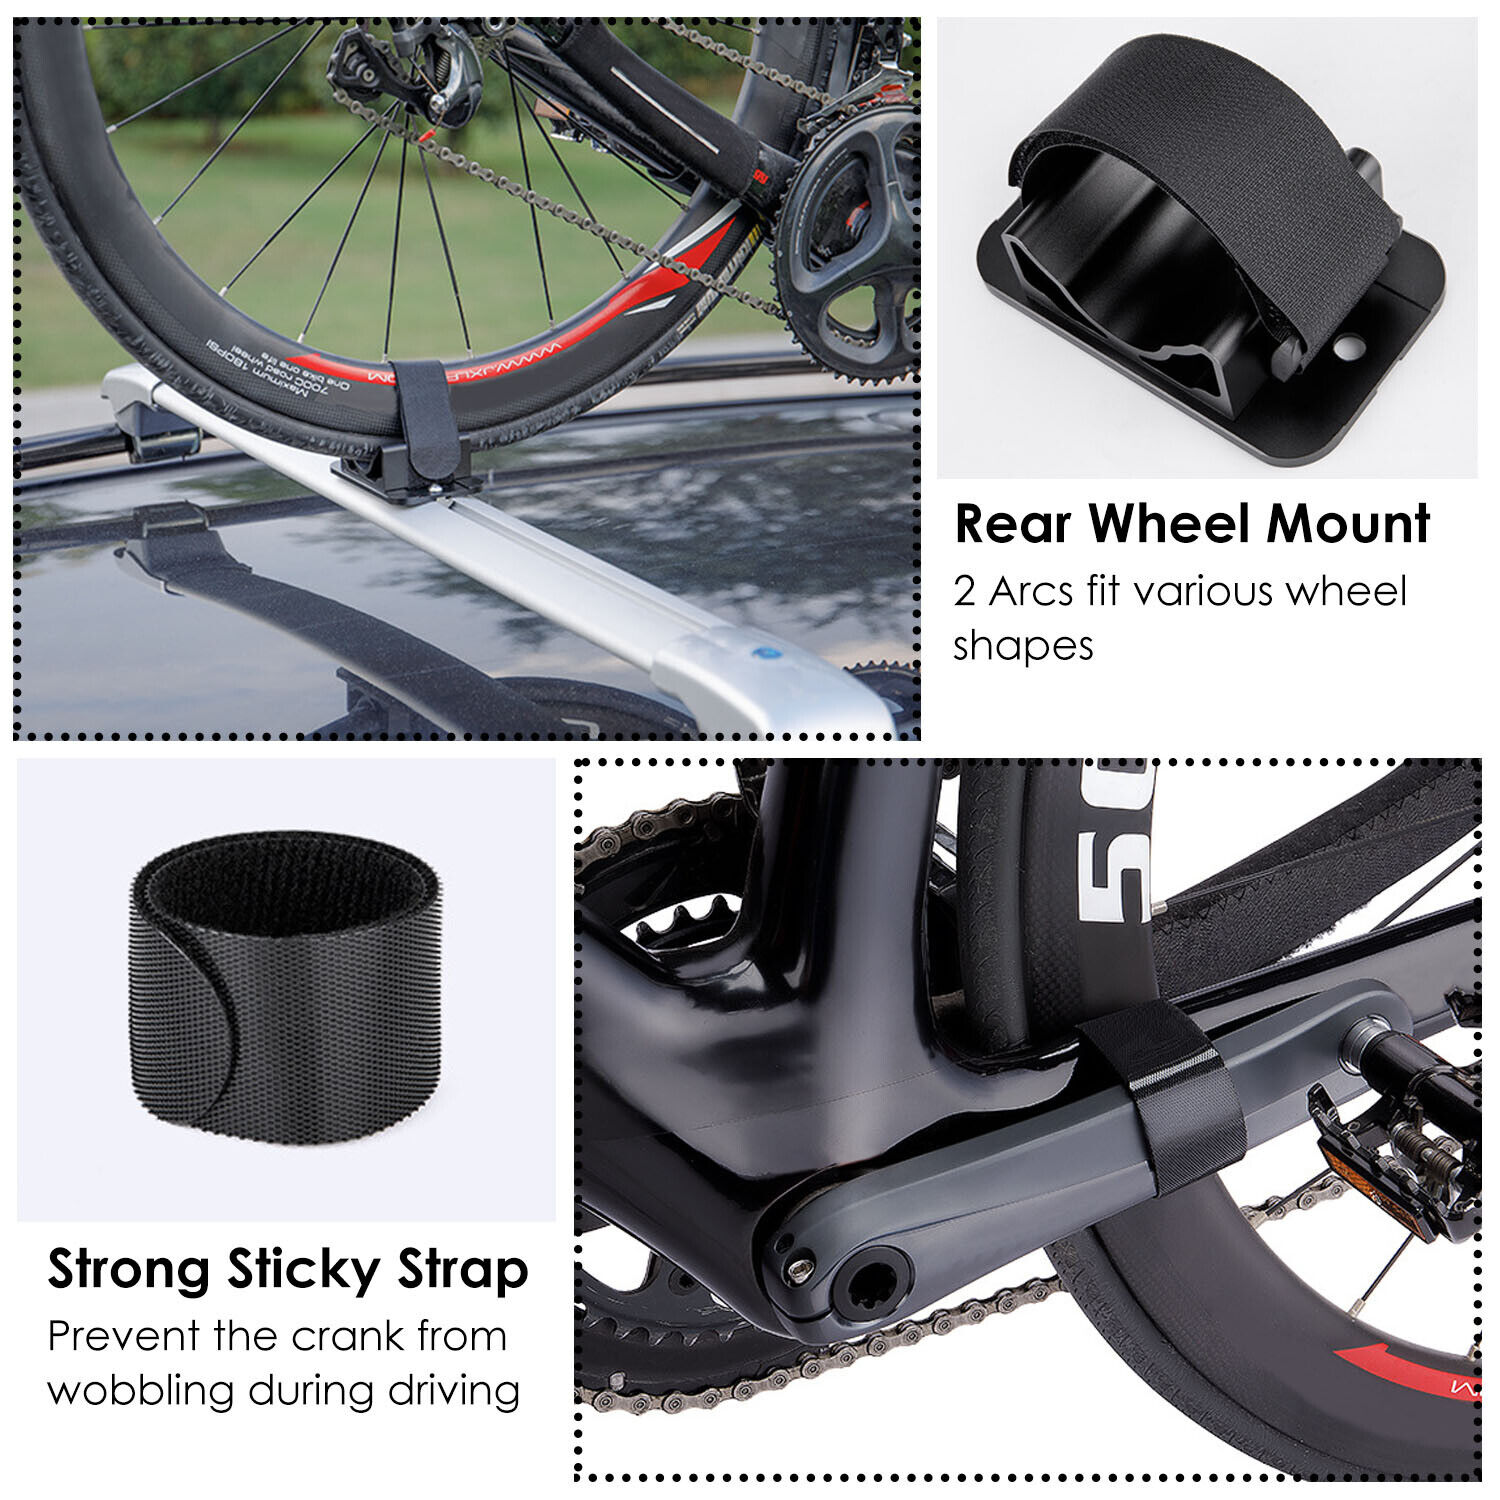 imountek Bike Block Fork Mount Bicycle Mount Carrier Rack for Car Roof Rack Cast-Aluminum